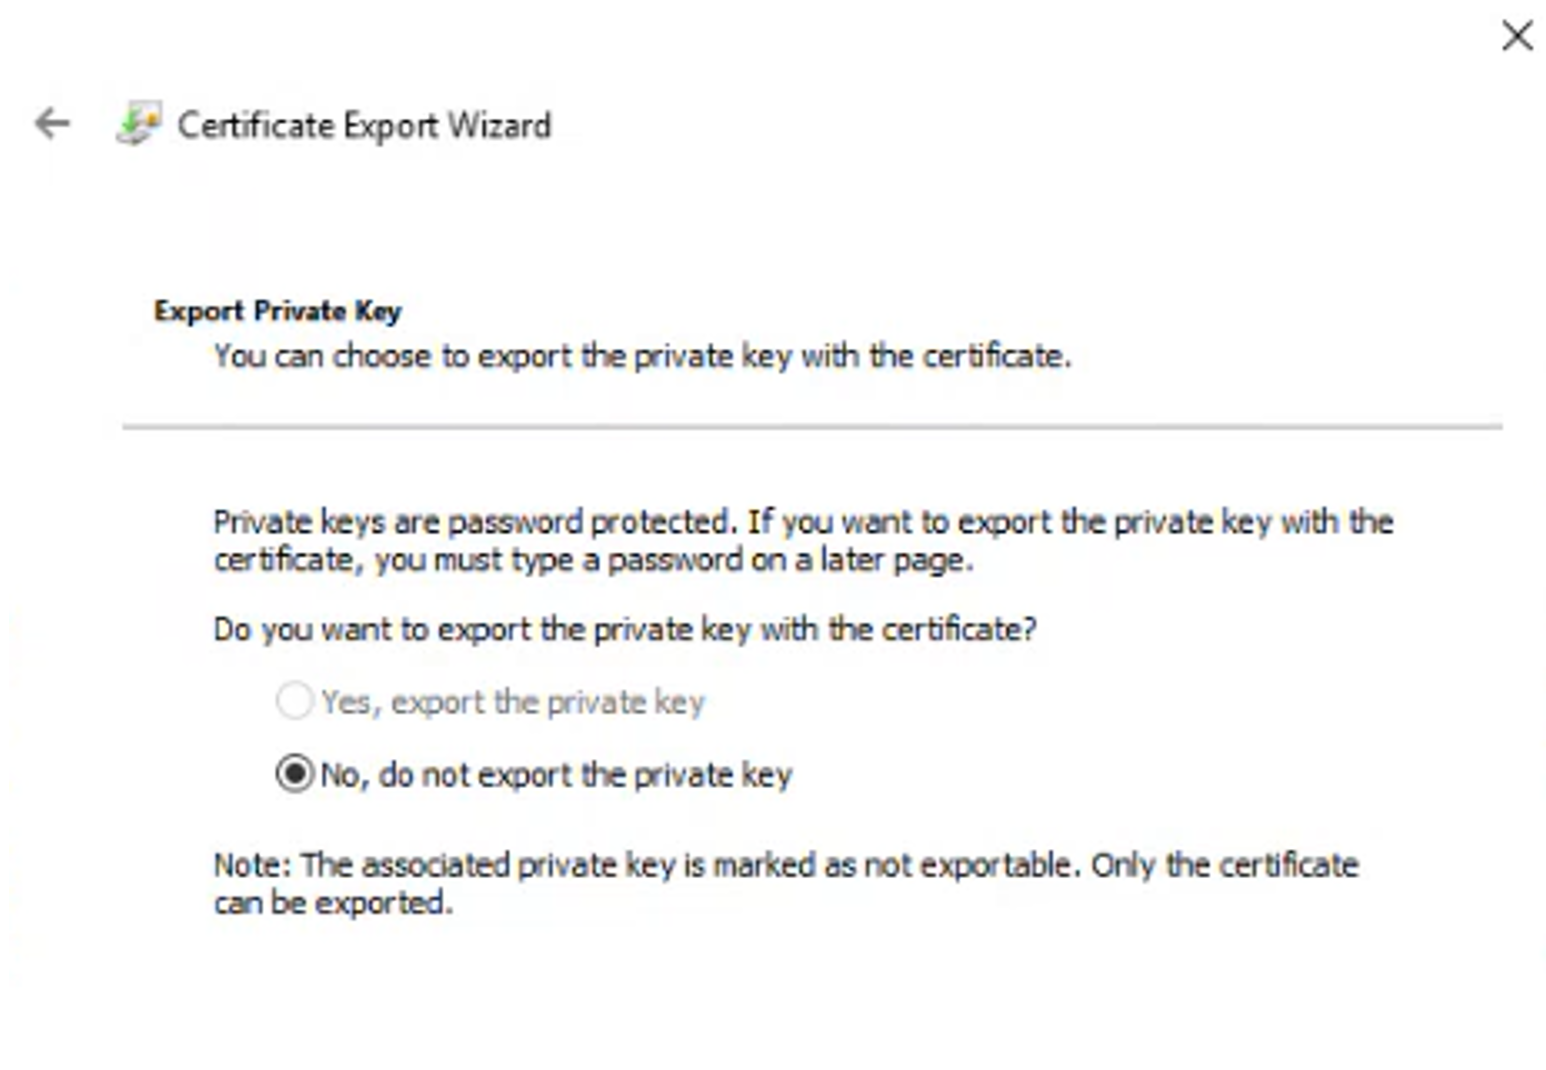 AAD_-_Certificate_requirements_export_wizard_base-64_1.png